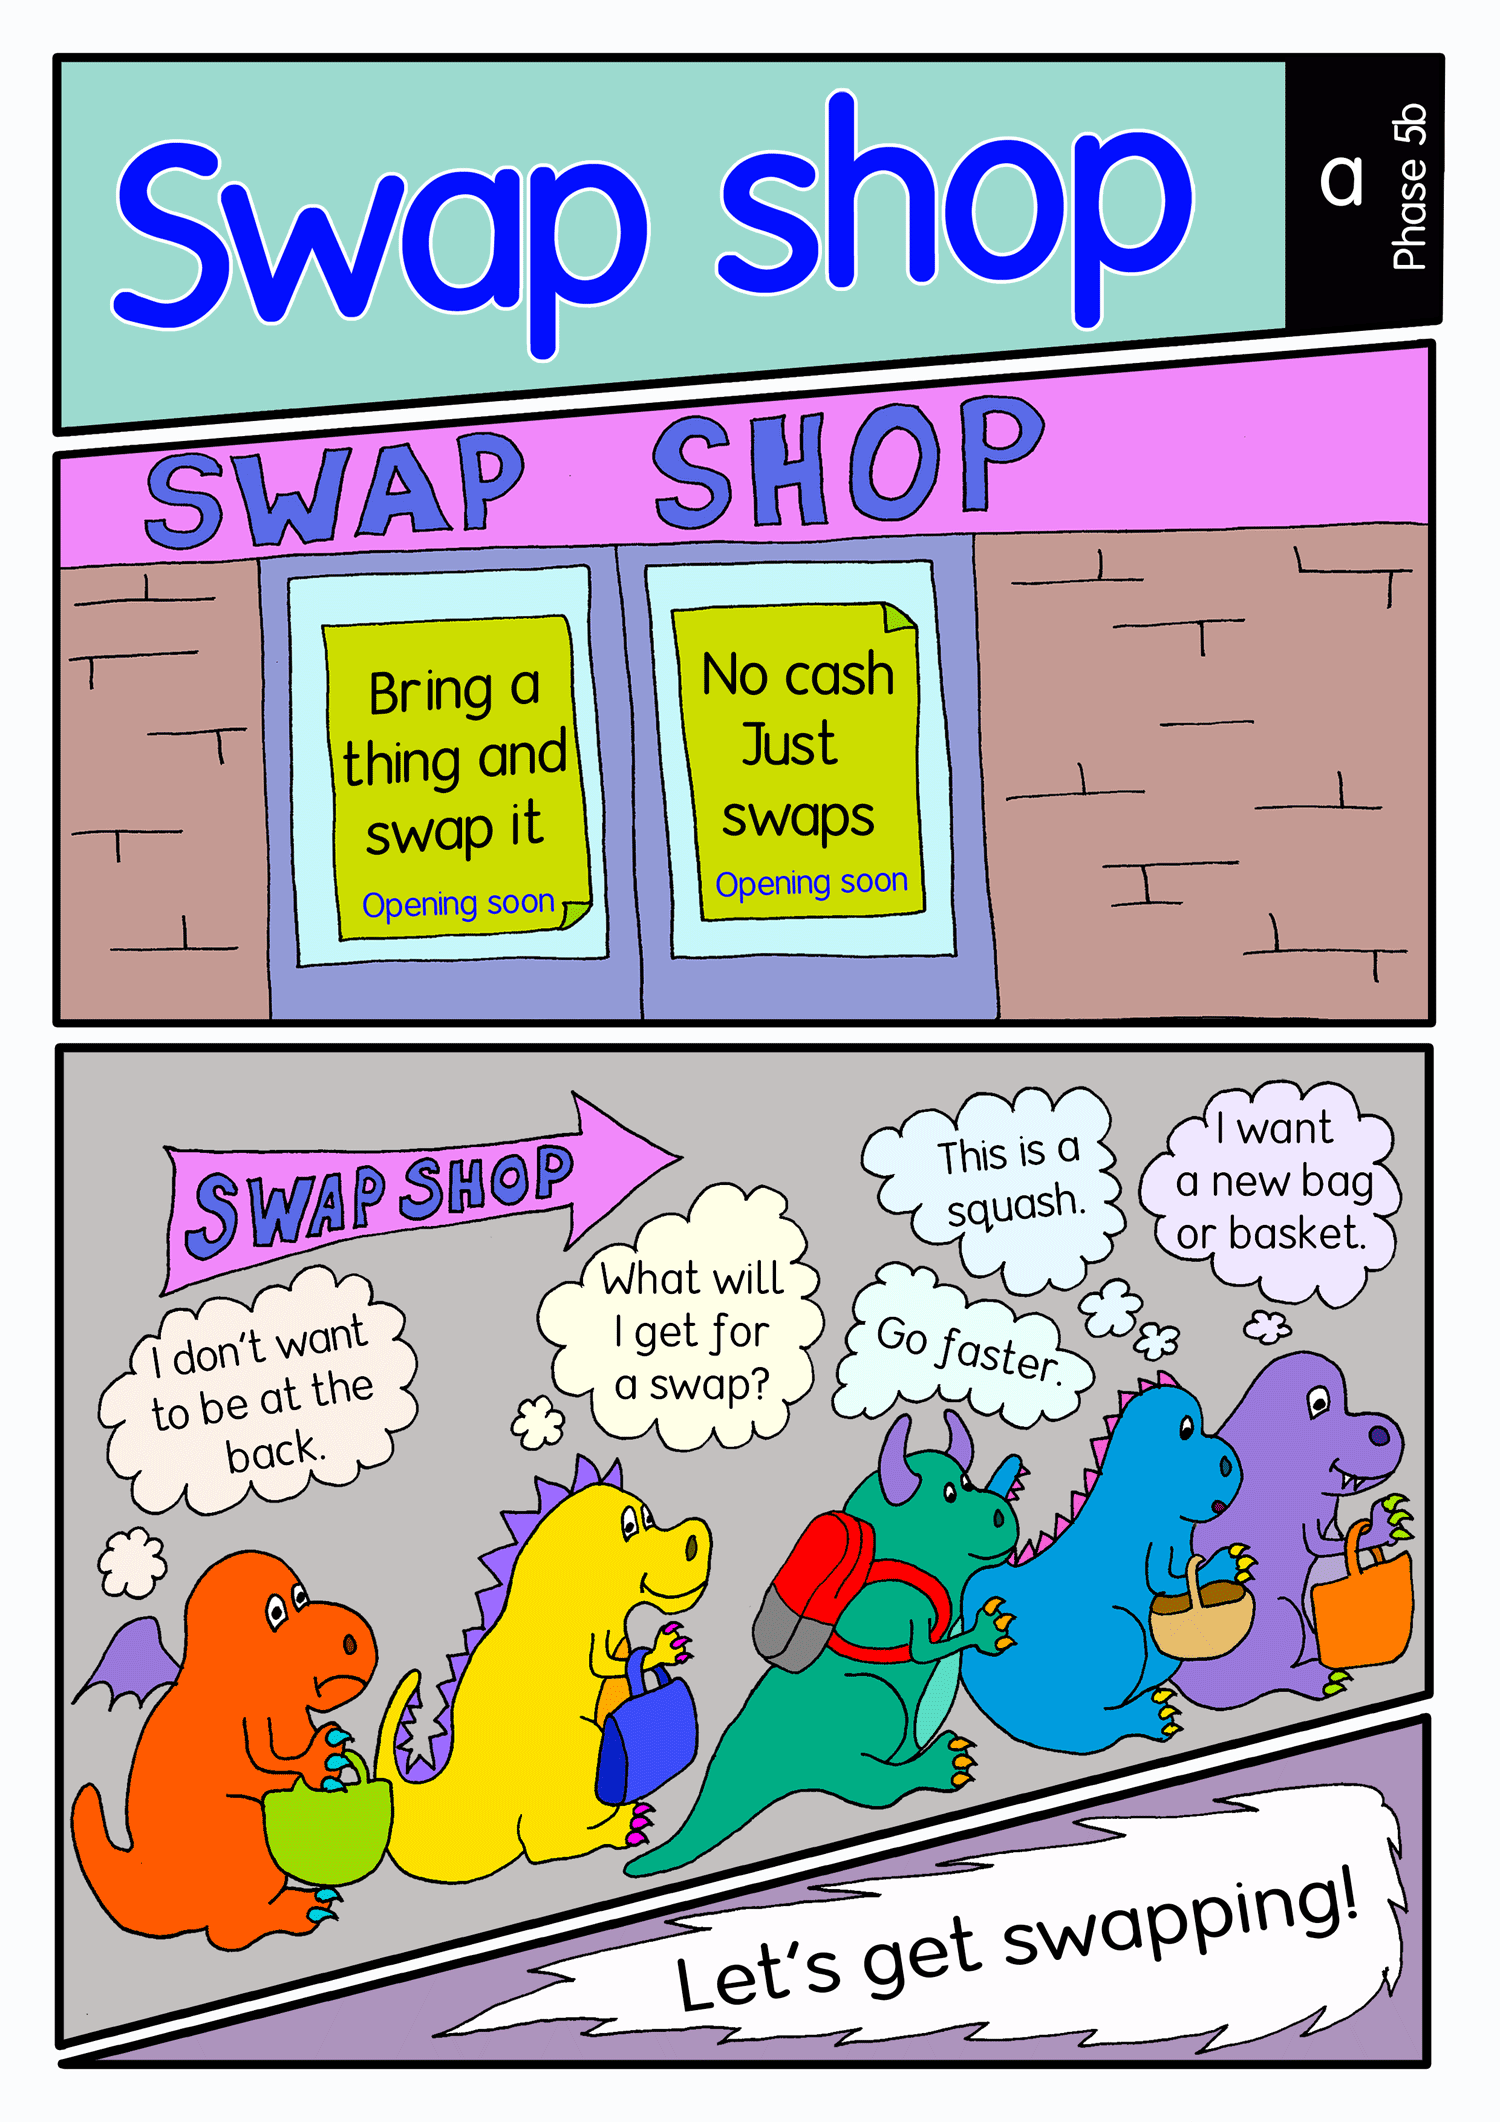 Swap shop comic panel1